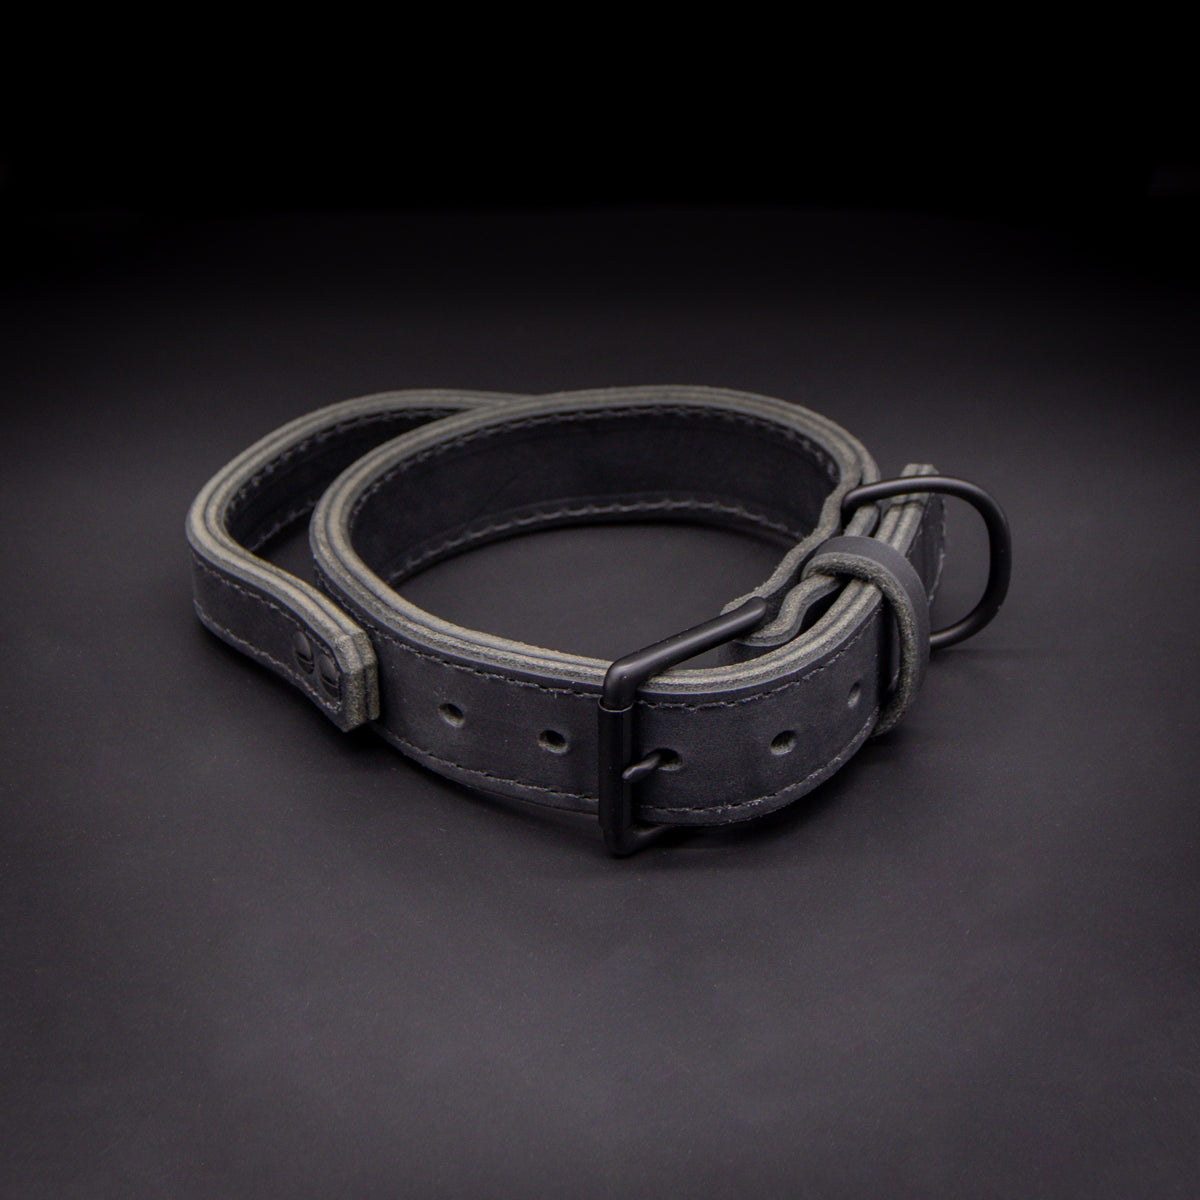 The 1.5" Agitation Dog Collar with Handle